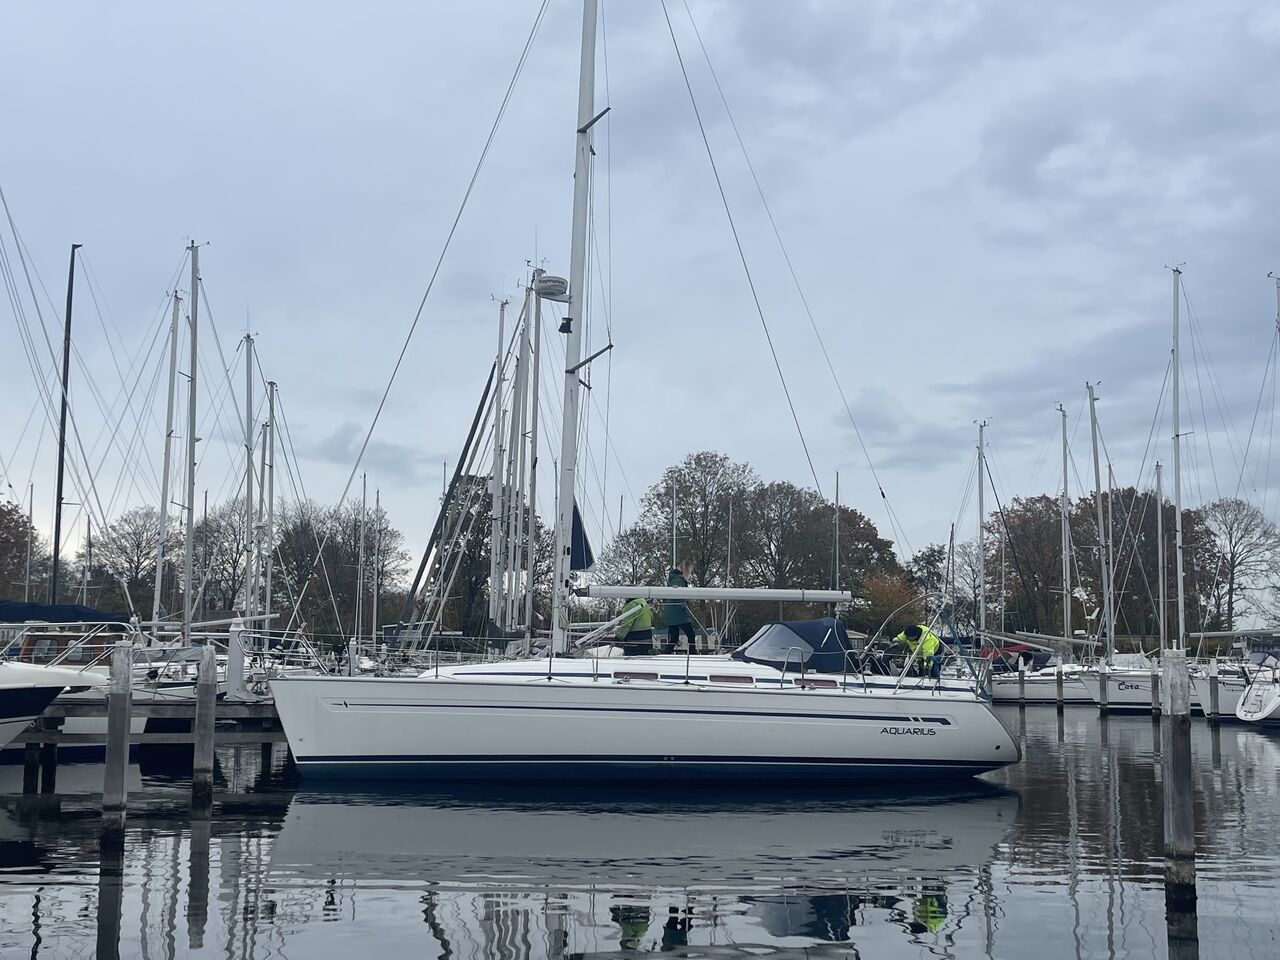 Bavaria 36 (sailboat) for sale